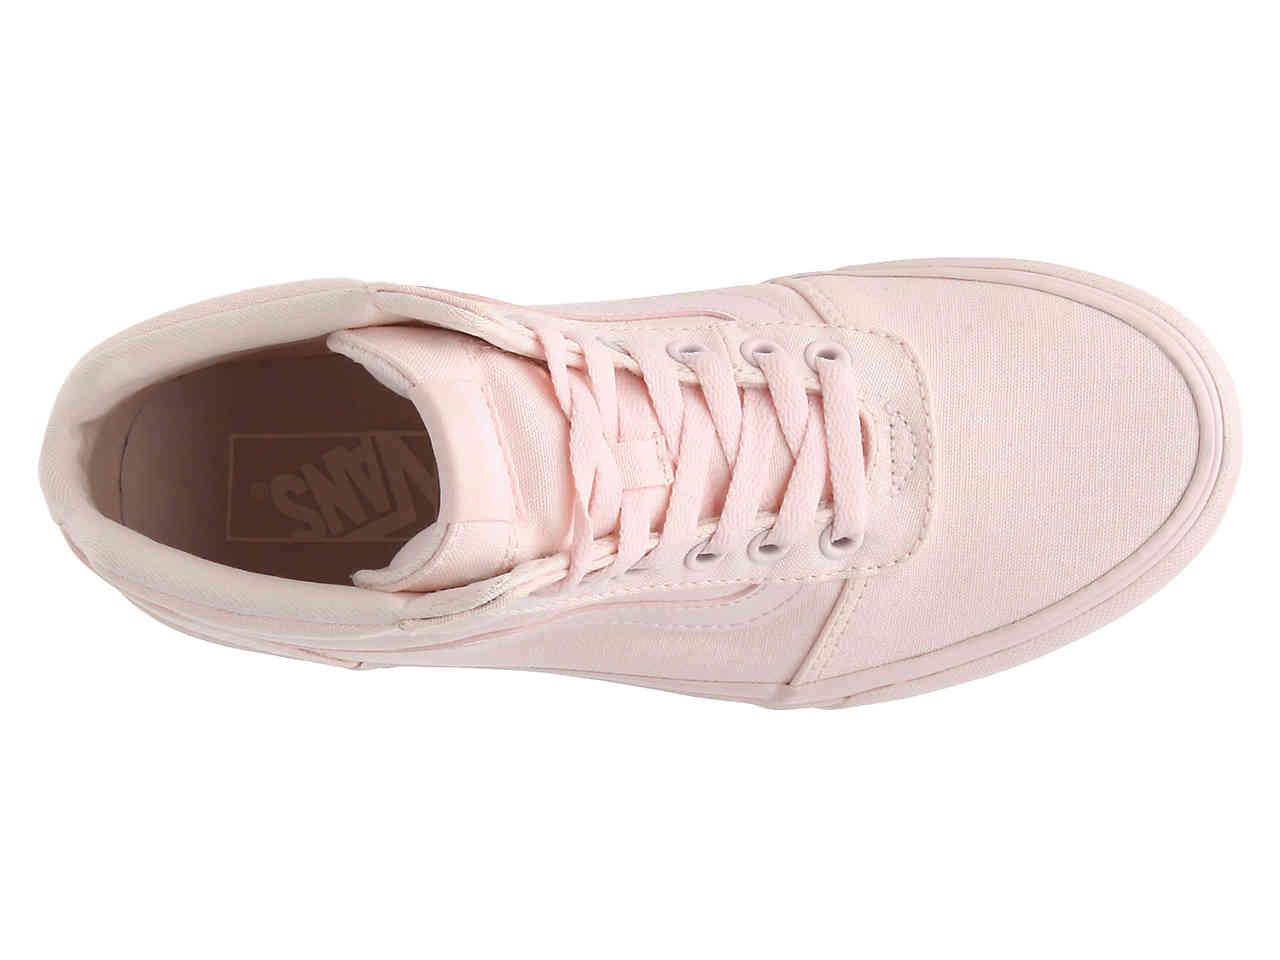 Vans Canvas Ward Hi High-top Sneaker in Light Pink (Pink) | Lyst